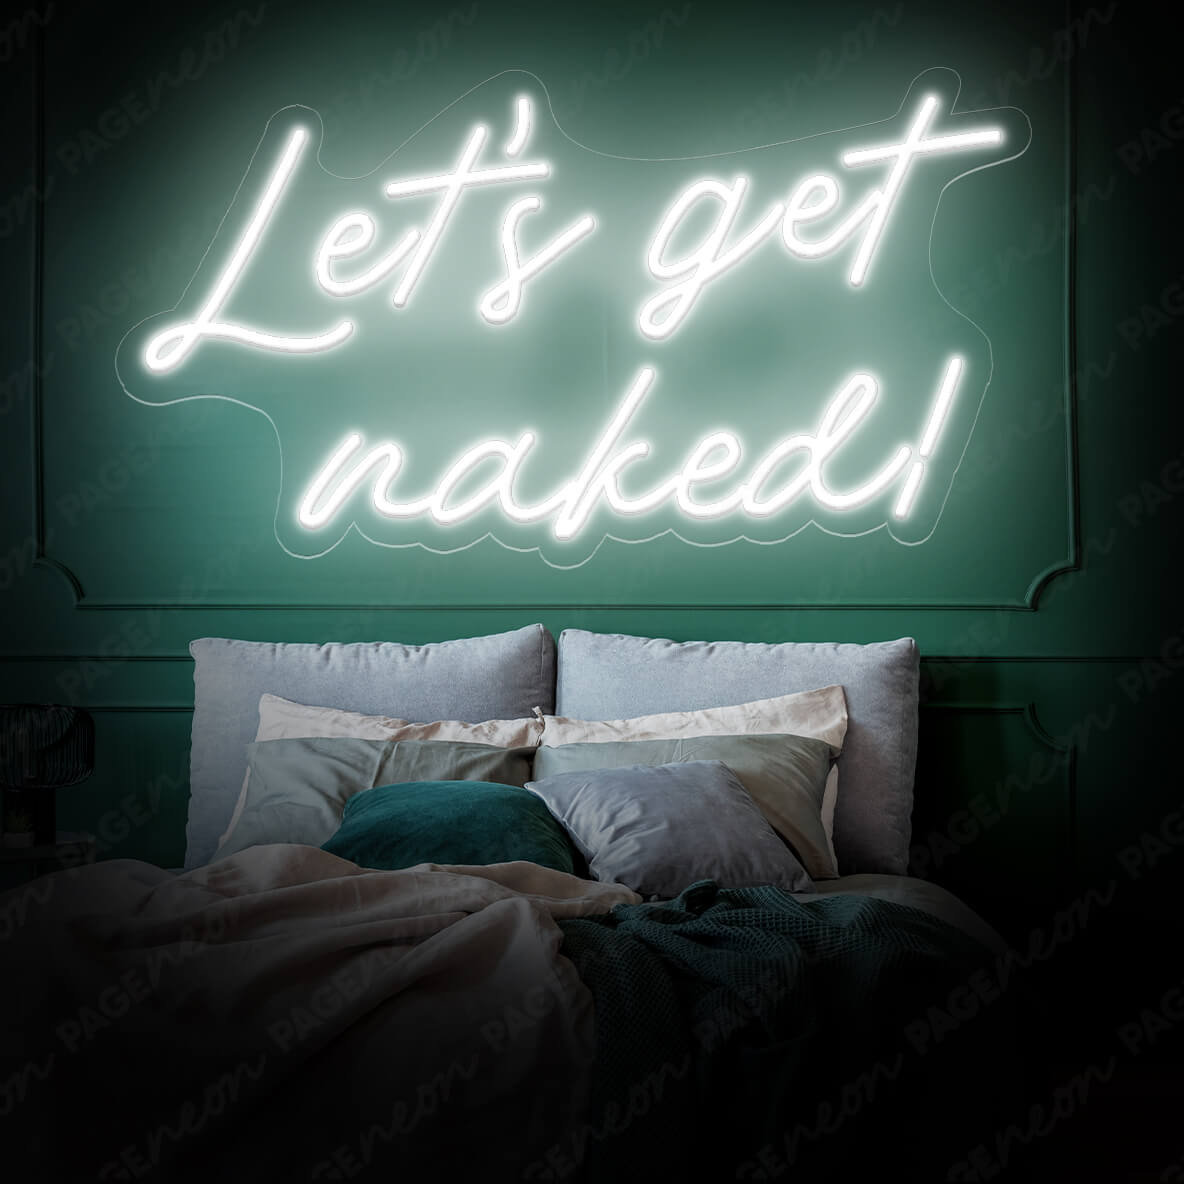 Let's Get Naked Neon Sign Man Cave Led Light White